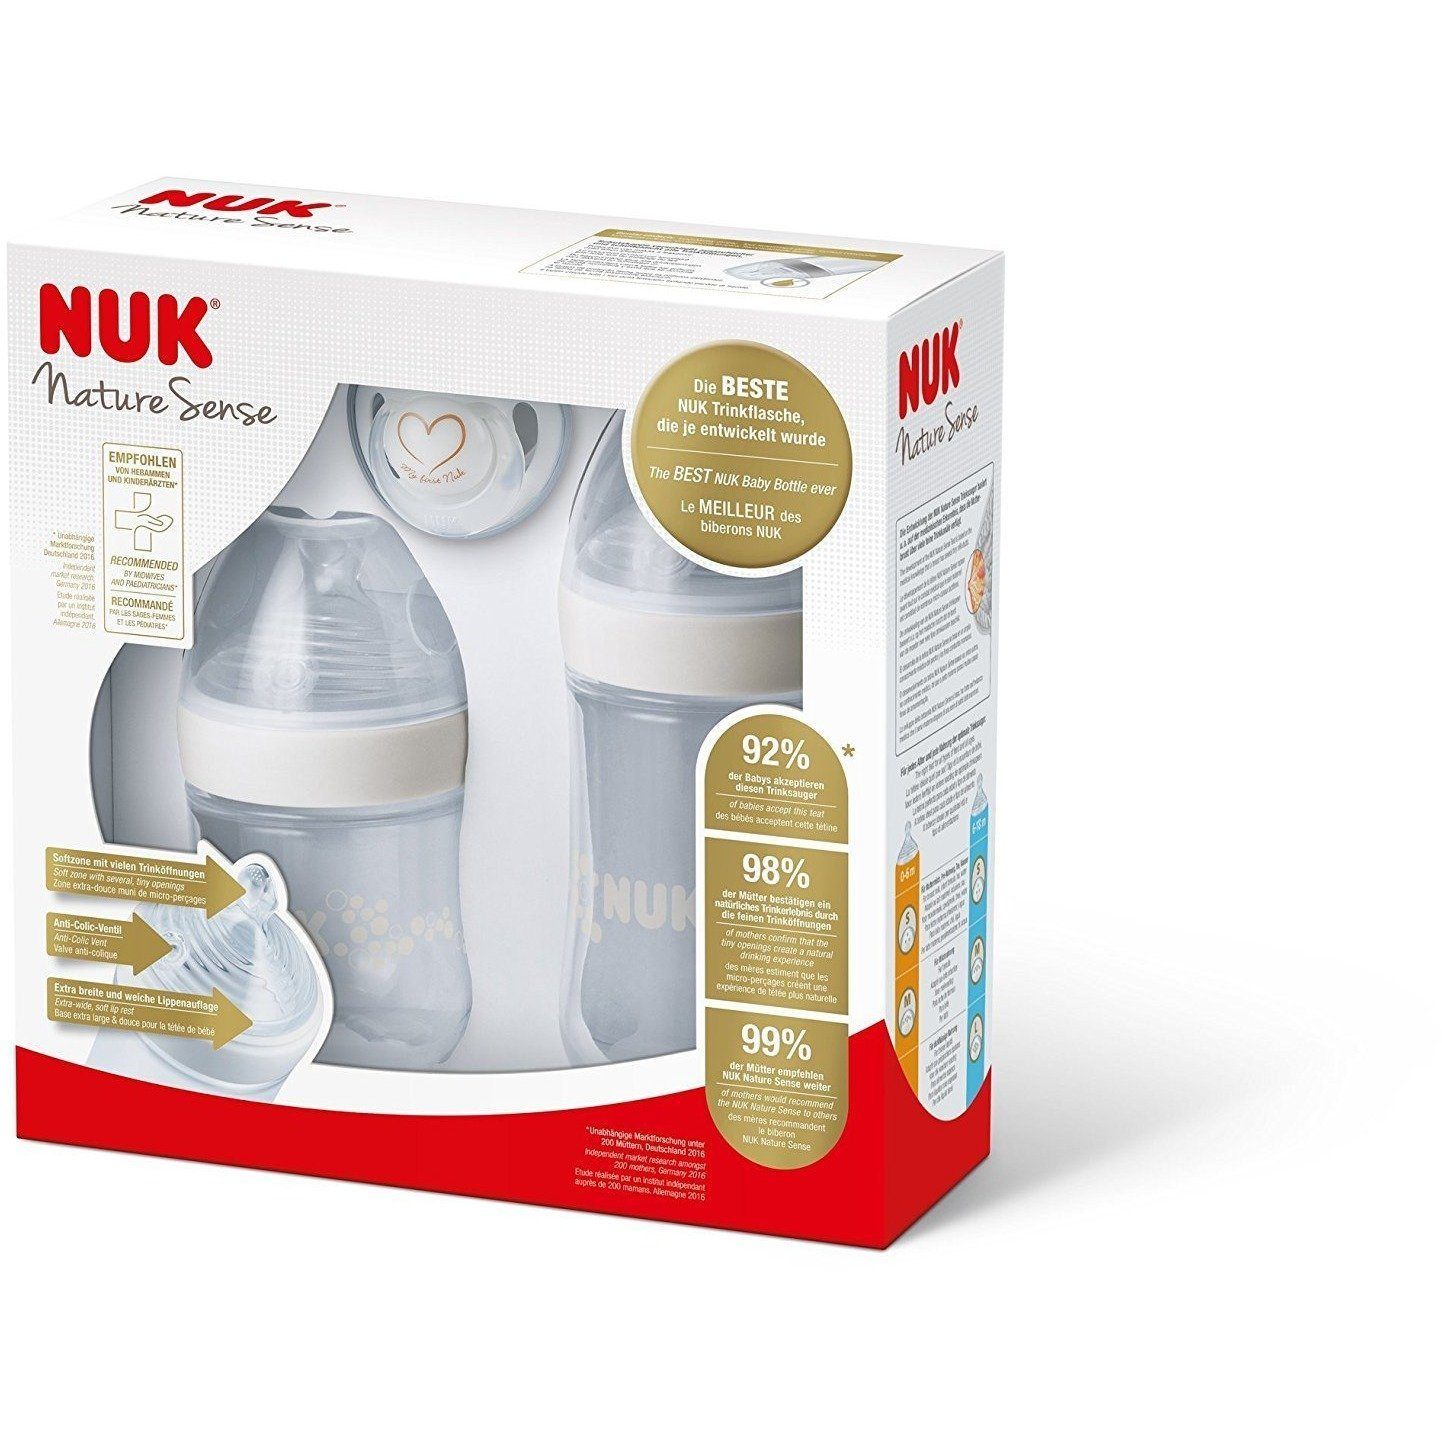 Nuk Nature Sense - Kit com 3 itens Anne Claire Baby Store 